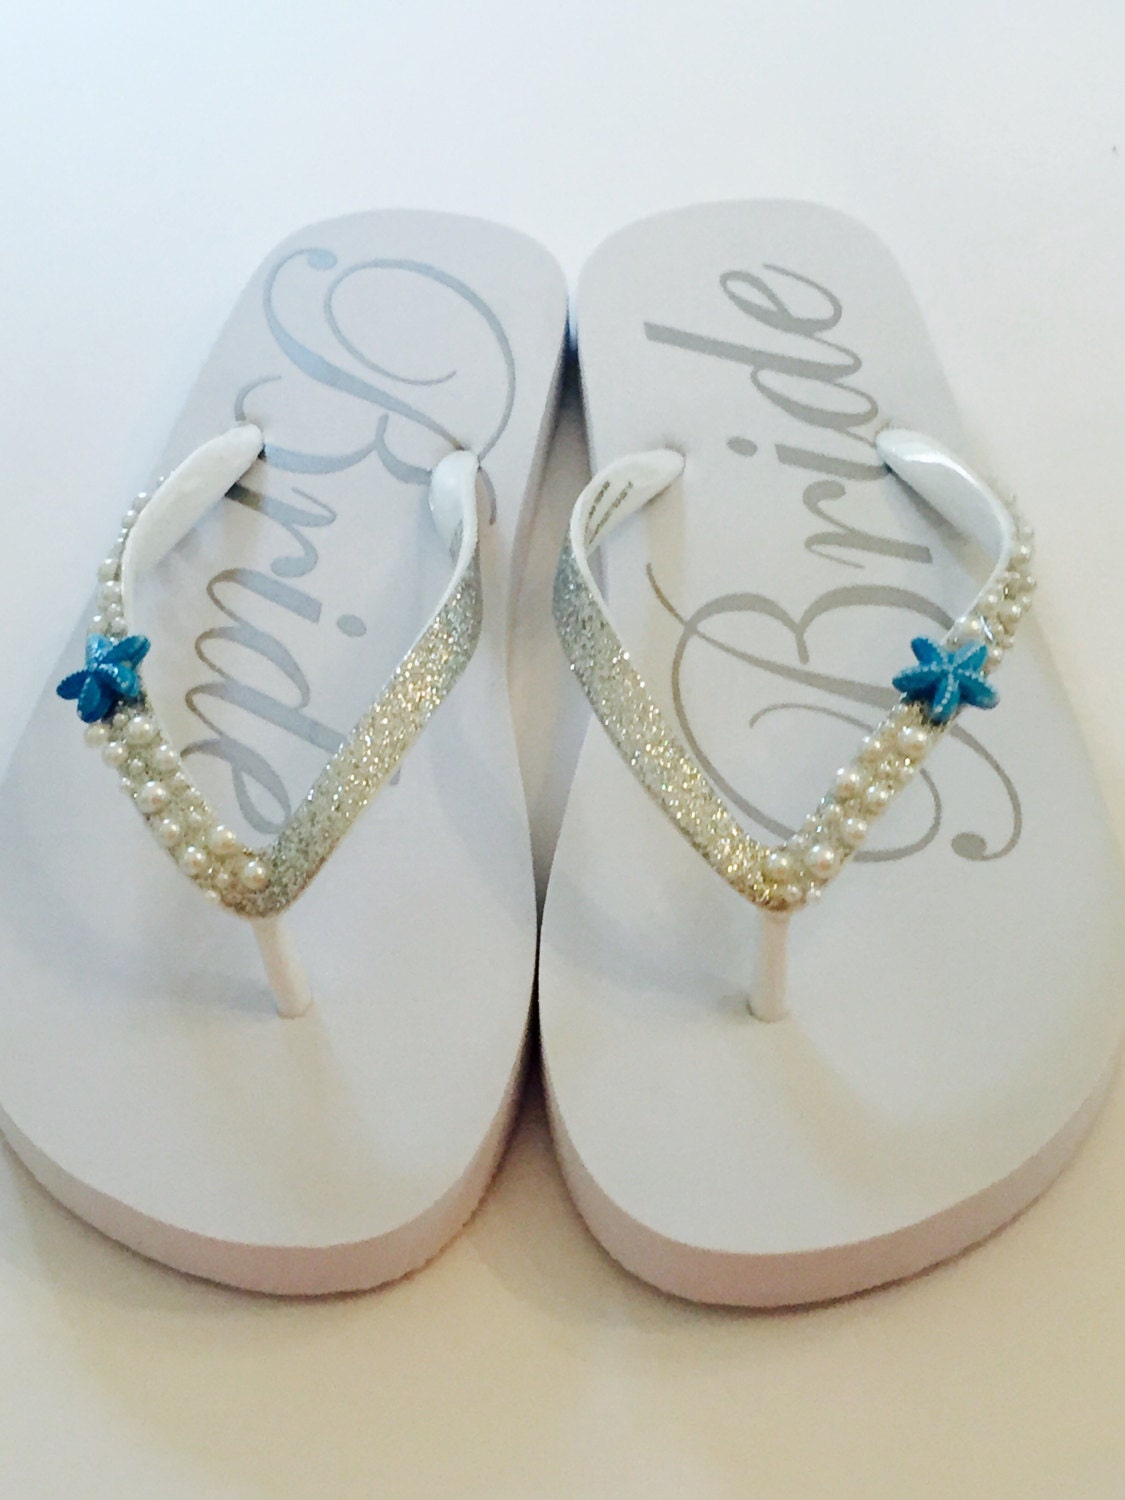 WEDDING Flip FlopsBridal Flip Flops/Wedges.Bridal Shoes.Beach